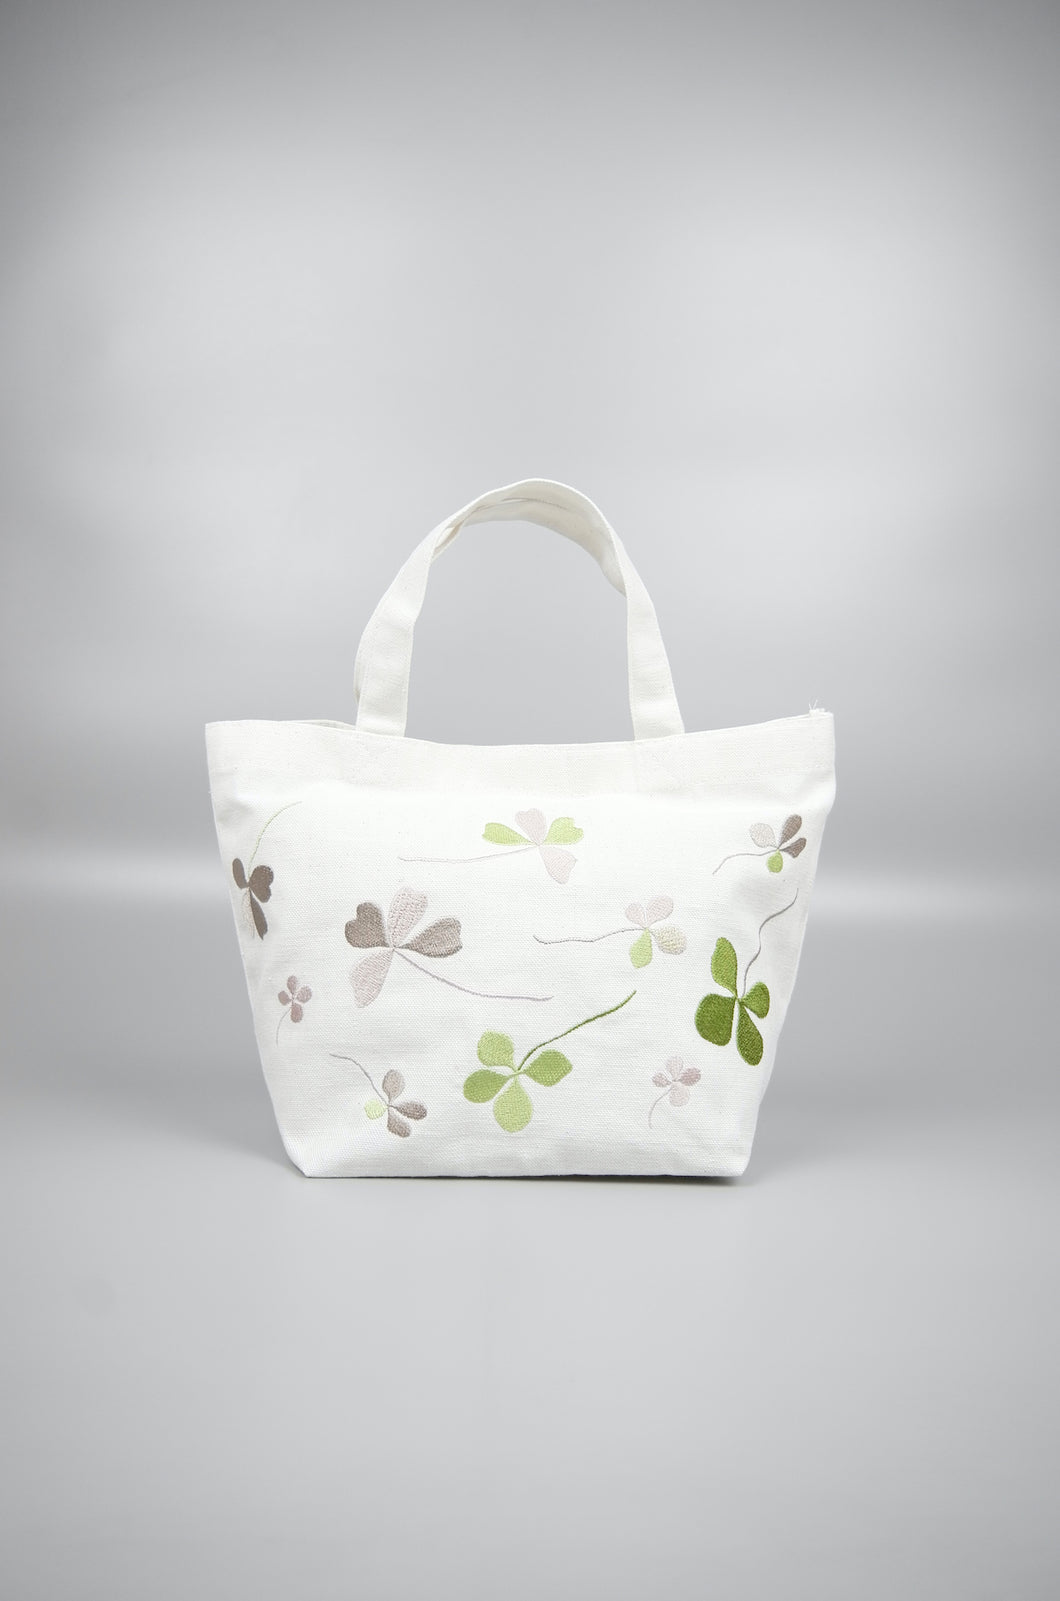 Clover Leaves on Natural Canvas Small Handbag